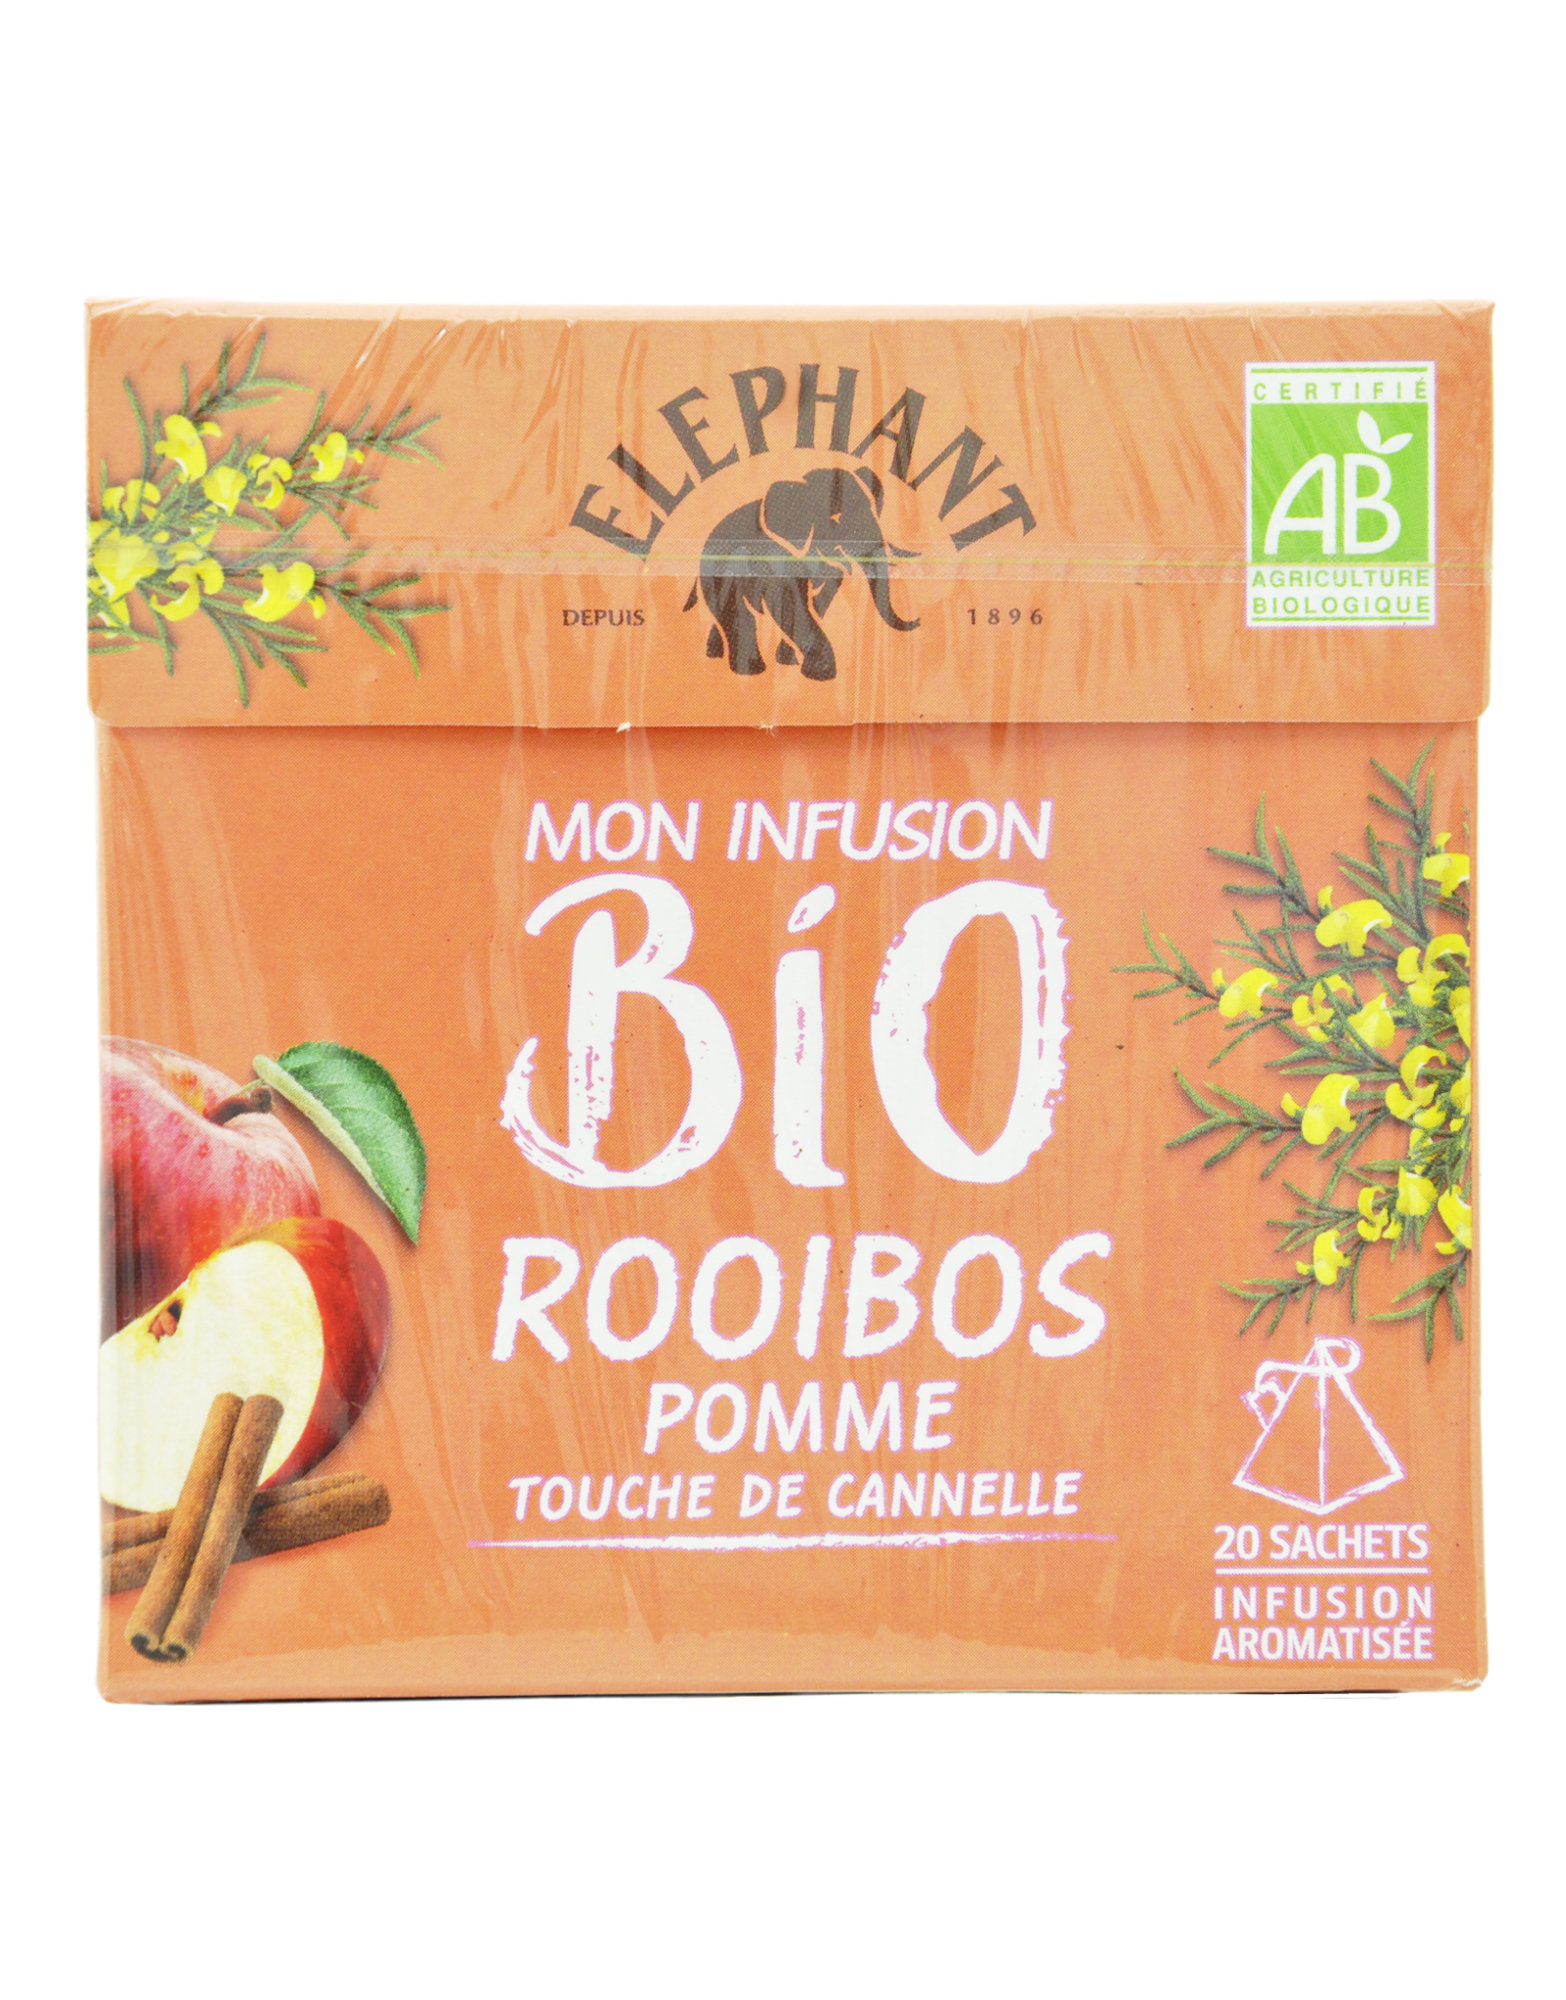 Elephant - Herbal Infusion Rooibos Apple and Cinnamon by Ki, 20